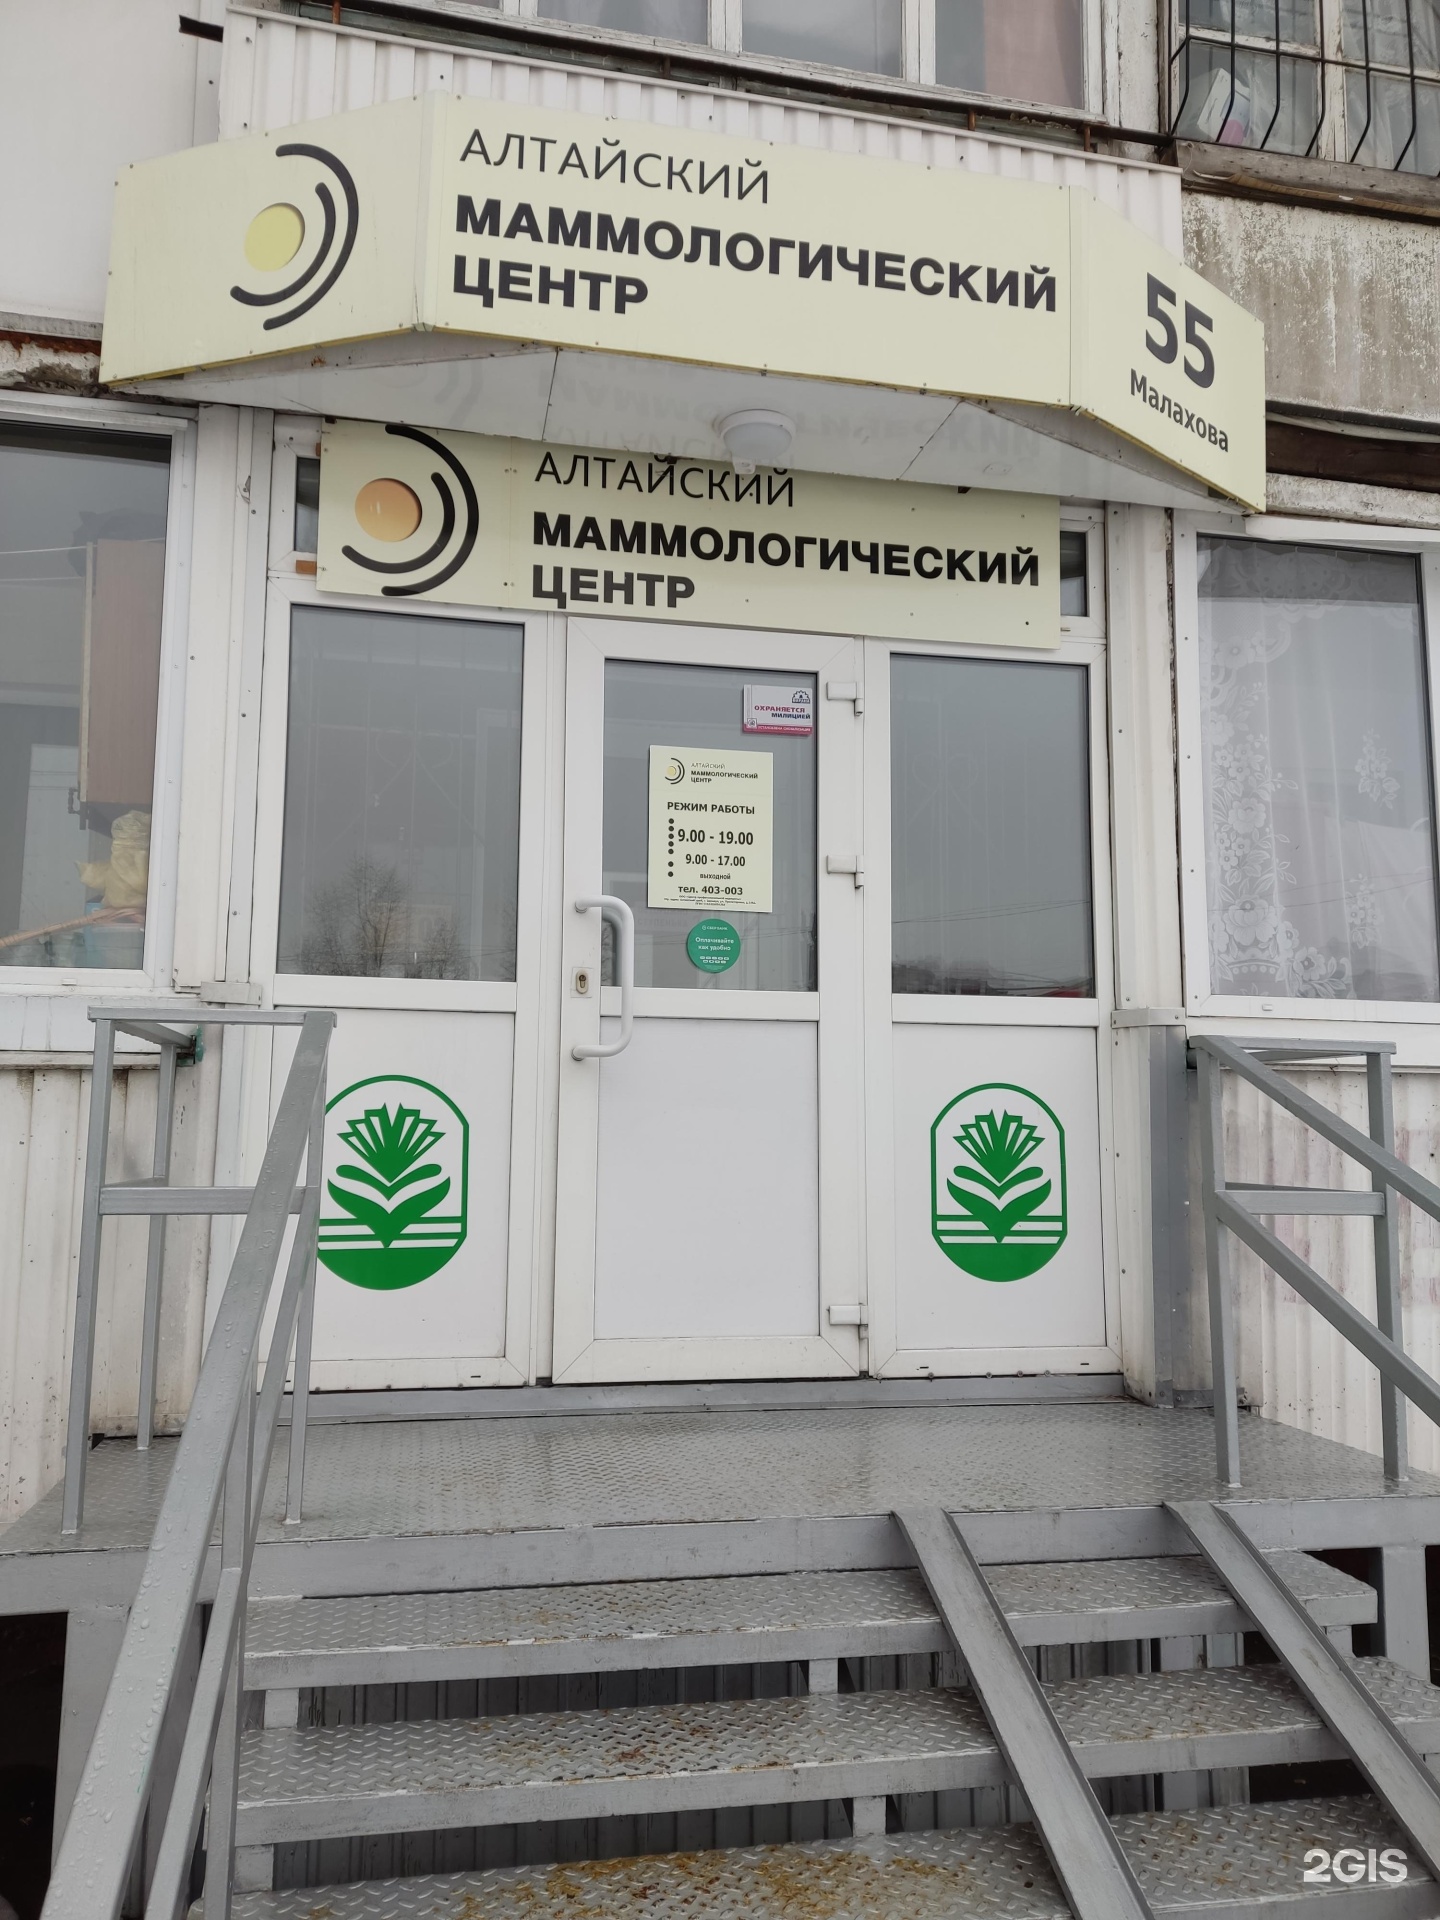 Маммологический центр Барнаул на Малахова 55. Маммологический центр Логинова. Маммологический центр в Махачкале. Советская 9 Барнаул маммологический центр.